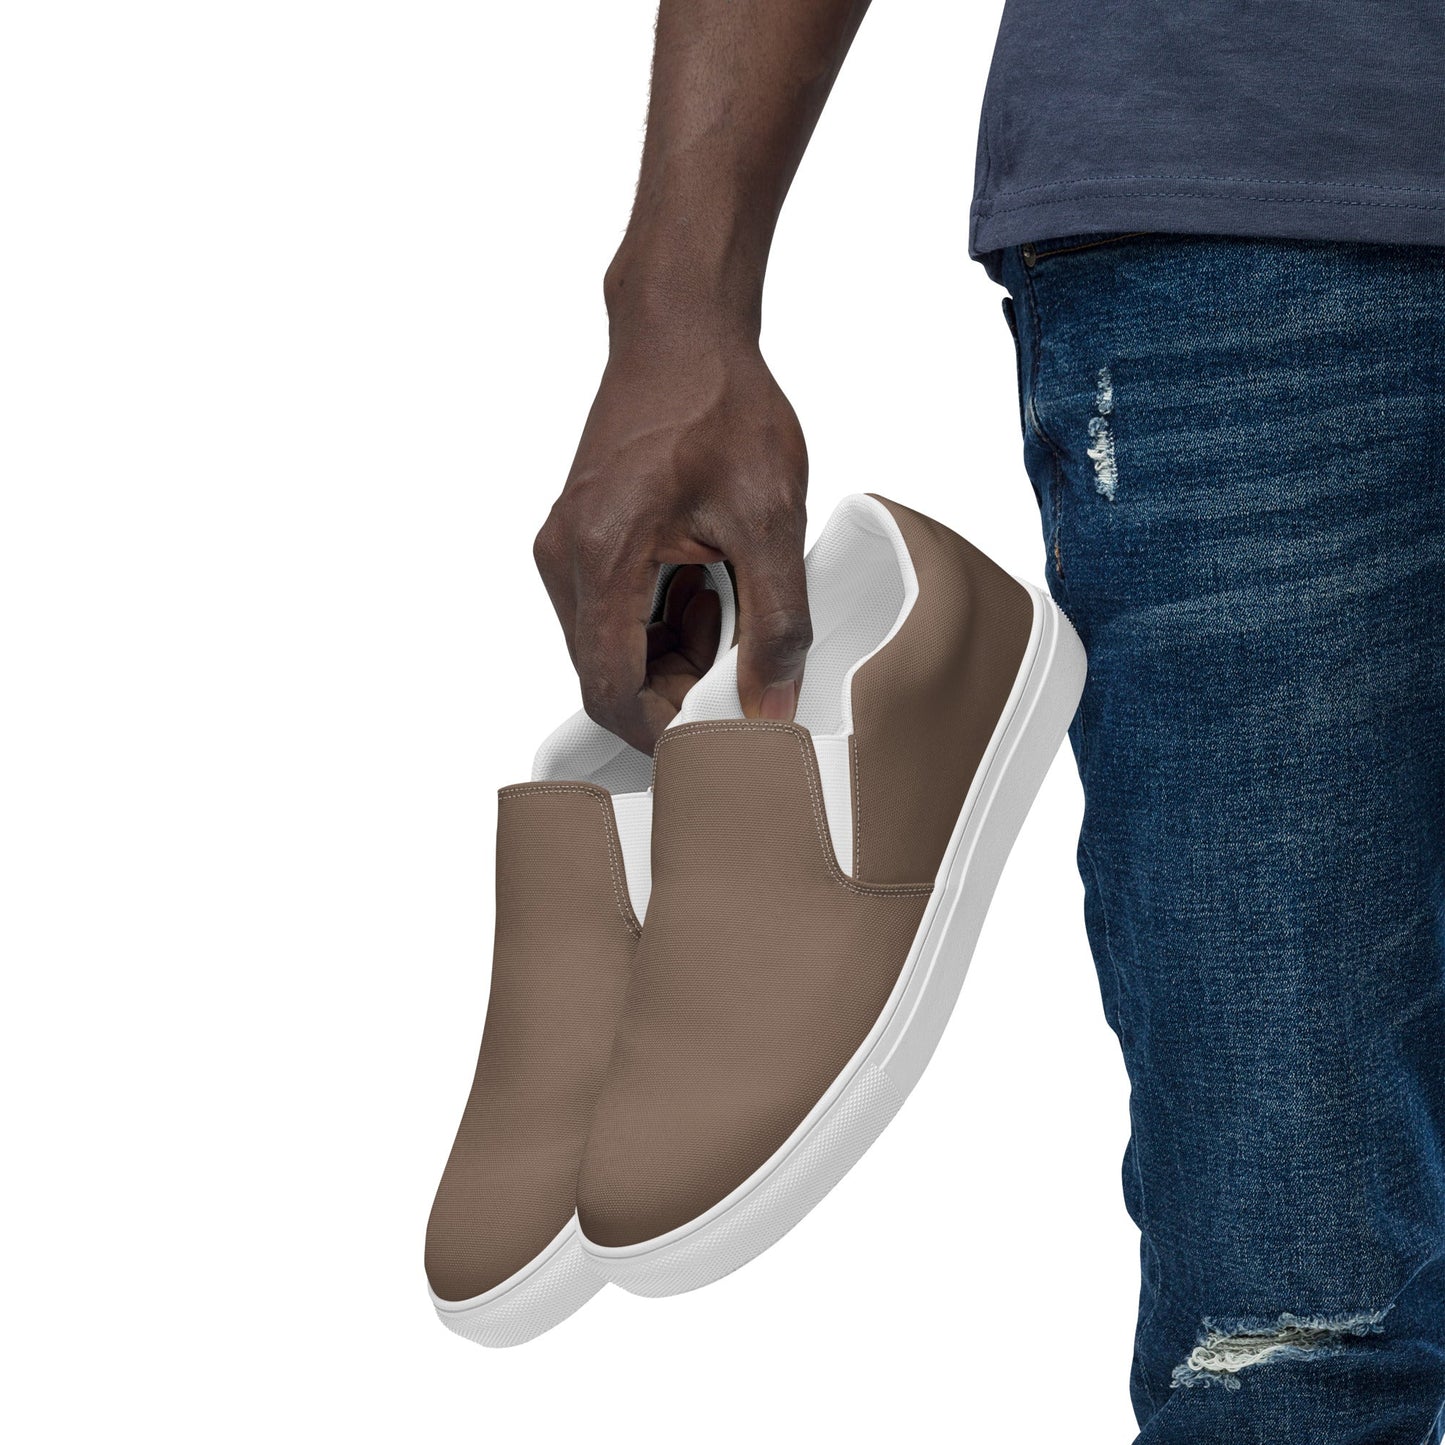 klasneakers Men’s slip-on canvas shoes - Latte Tan